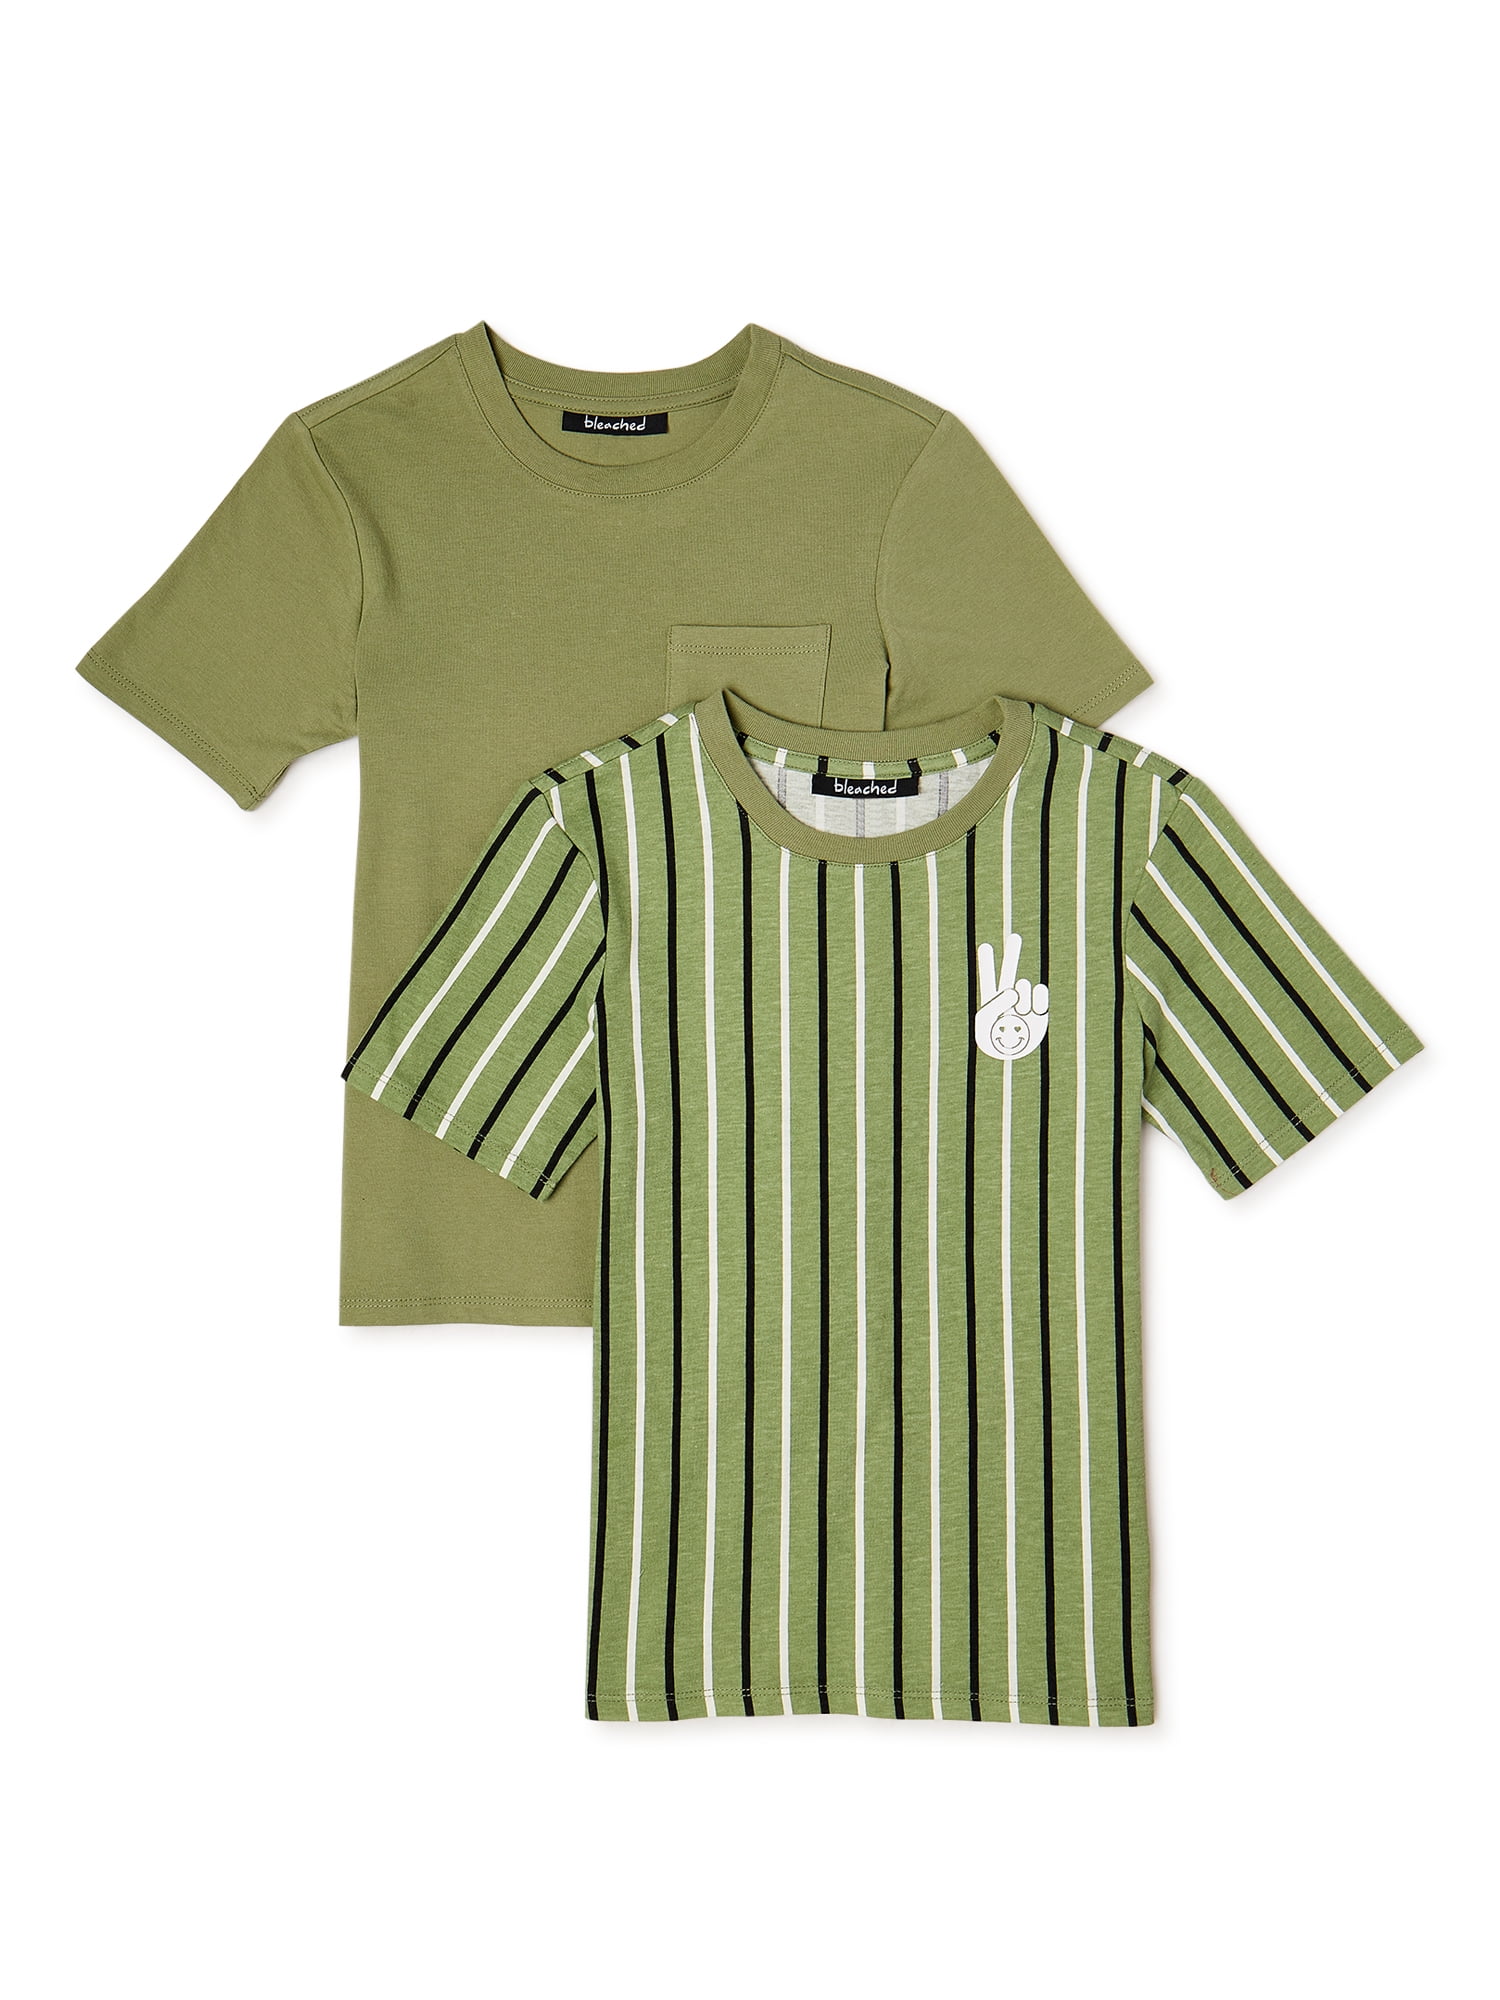 Bleached Boys Striped T-Shirt and Plain 2 Pack, - Walmart.com